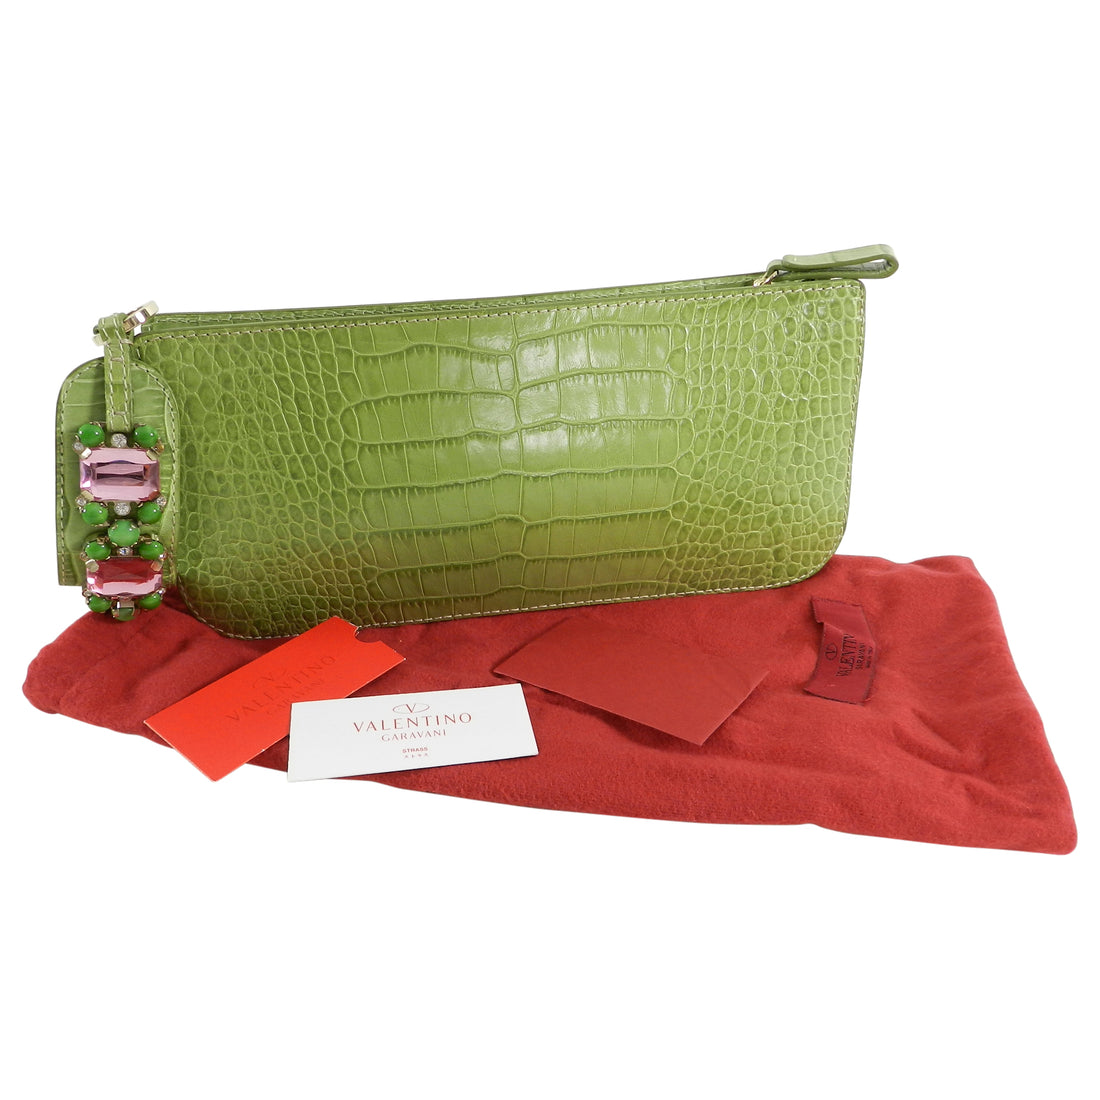 Valentino Green Croc Embossed Leather Jewel Wristlet Bag